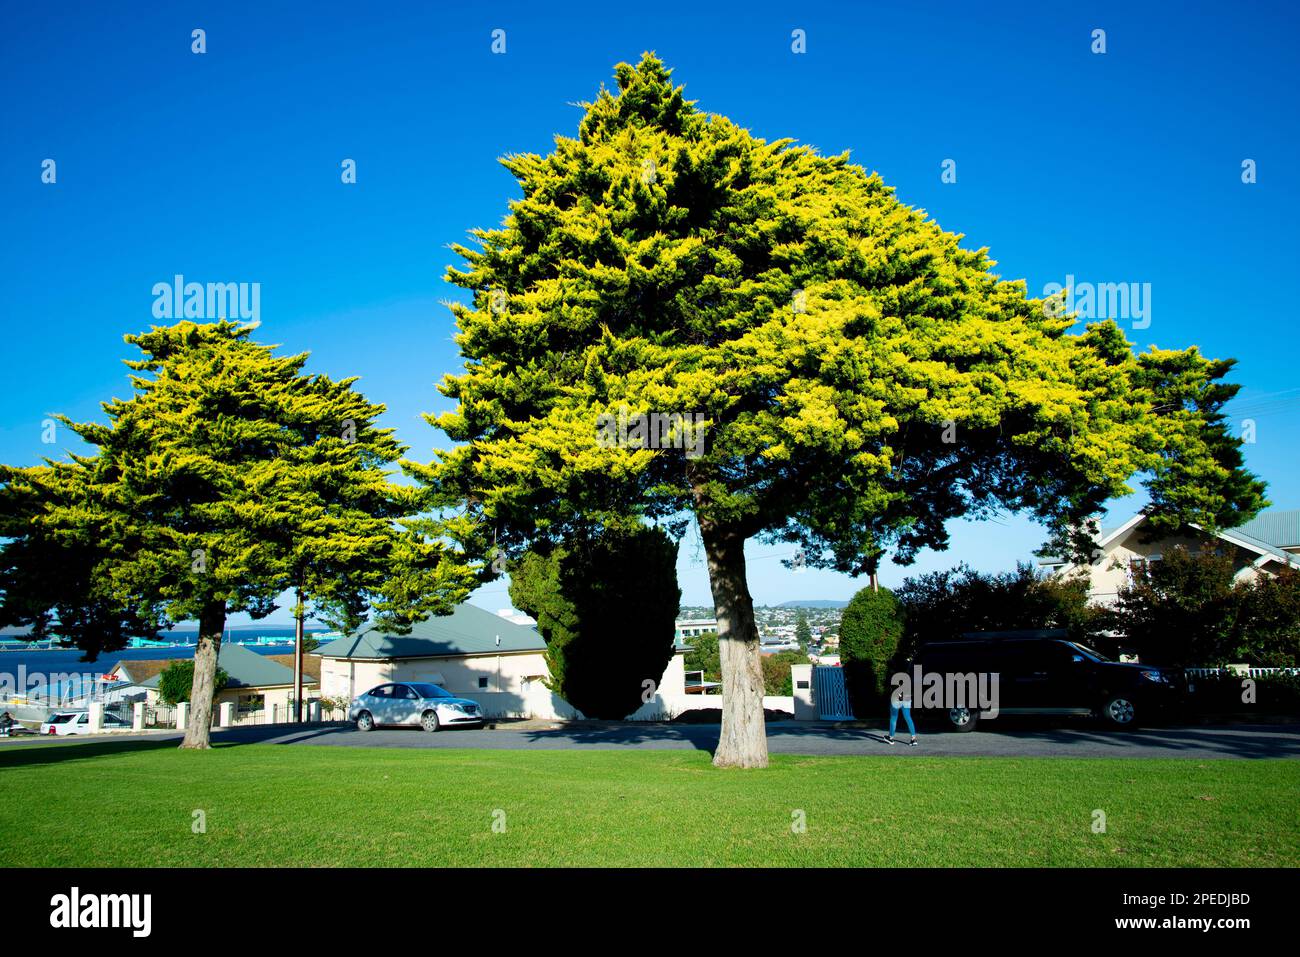 Mature Specimen of Castlewellan Leyland Cypress Tree Stock Photo